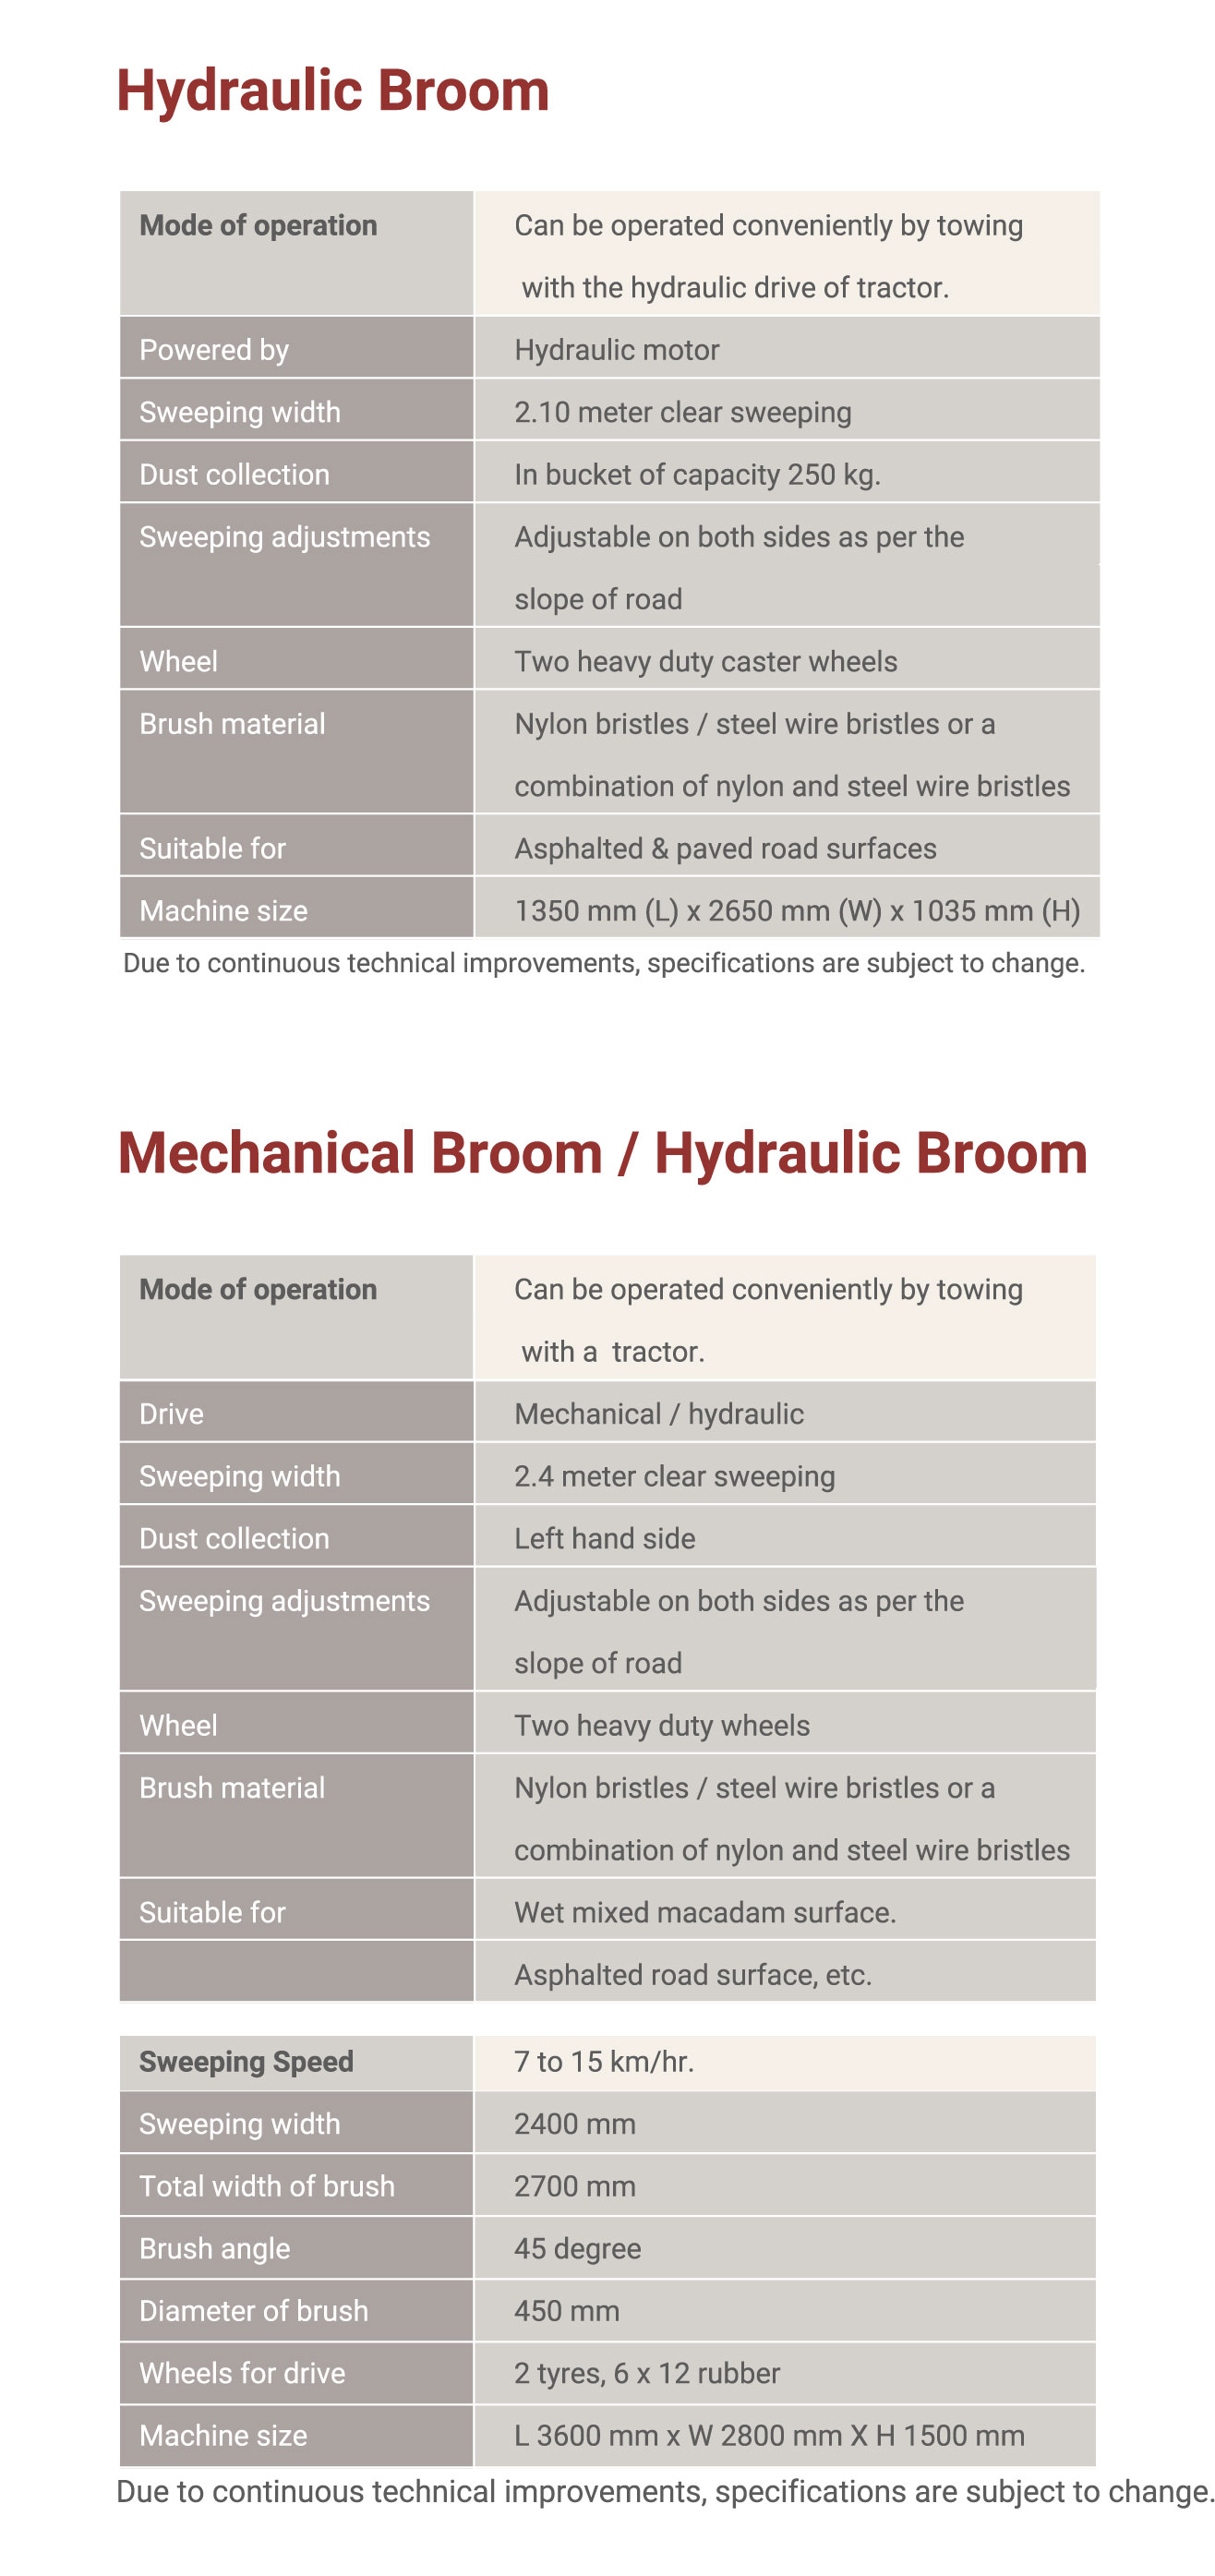 Hydraulic Broom Specifications